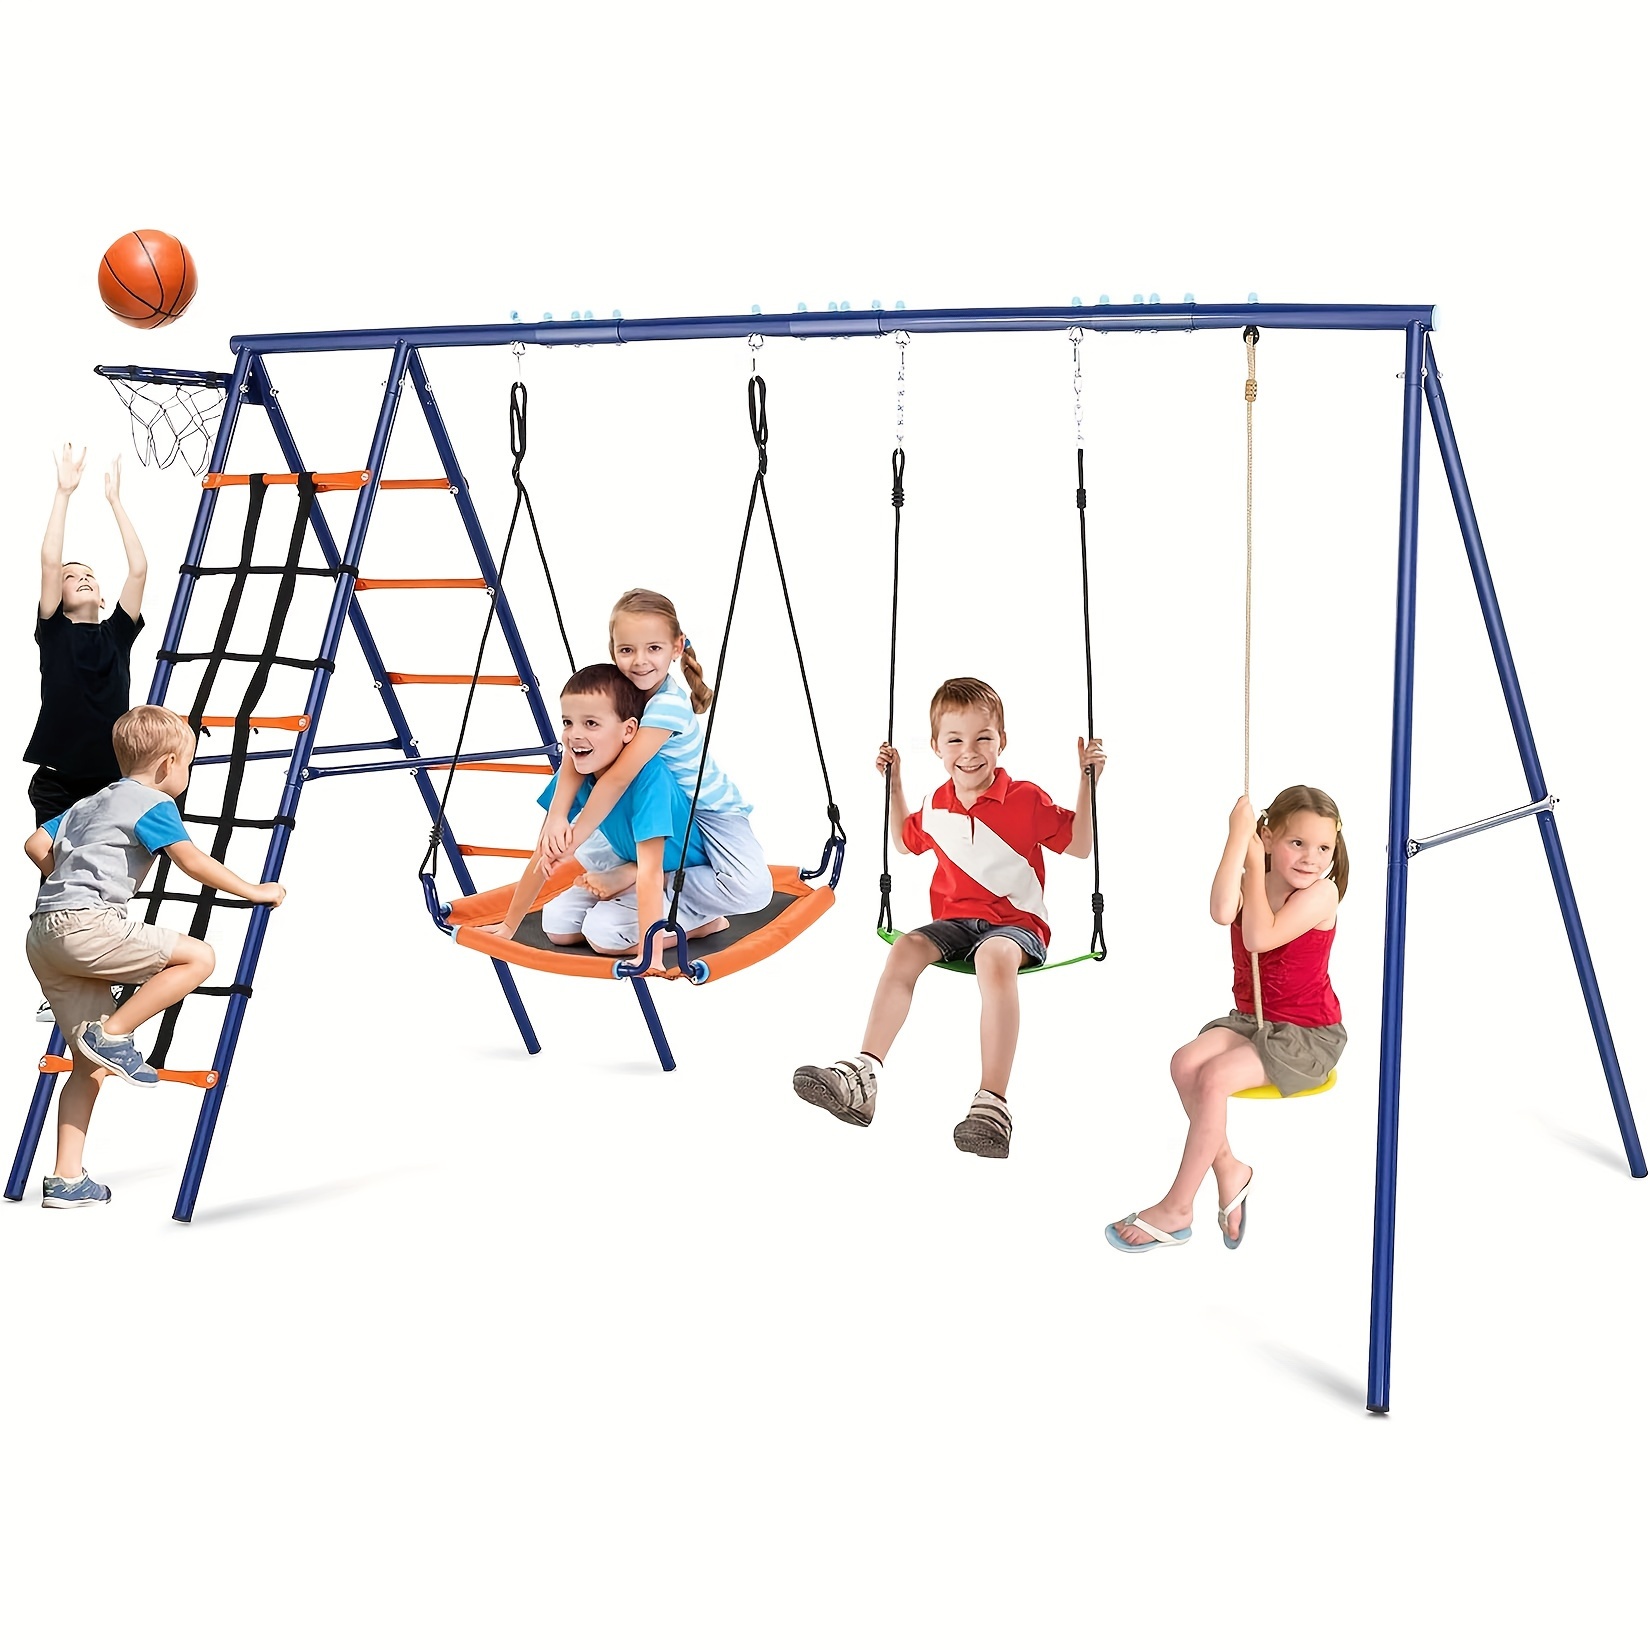 

Swing Set For Backyard - 6 In 1 Multifunction Kids Swing Set Heavy Duty 550 Lbs Outdoor Extra Large Metal Swing Frame With 3 Adjustable Swing Climbing Net Ladder Basketball Hoop